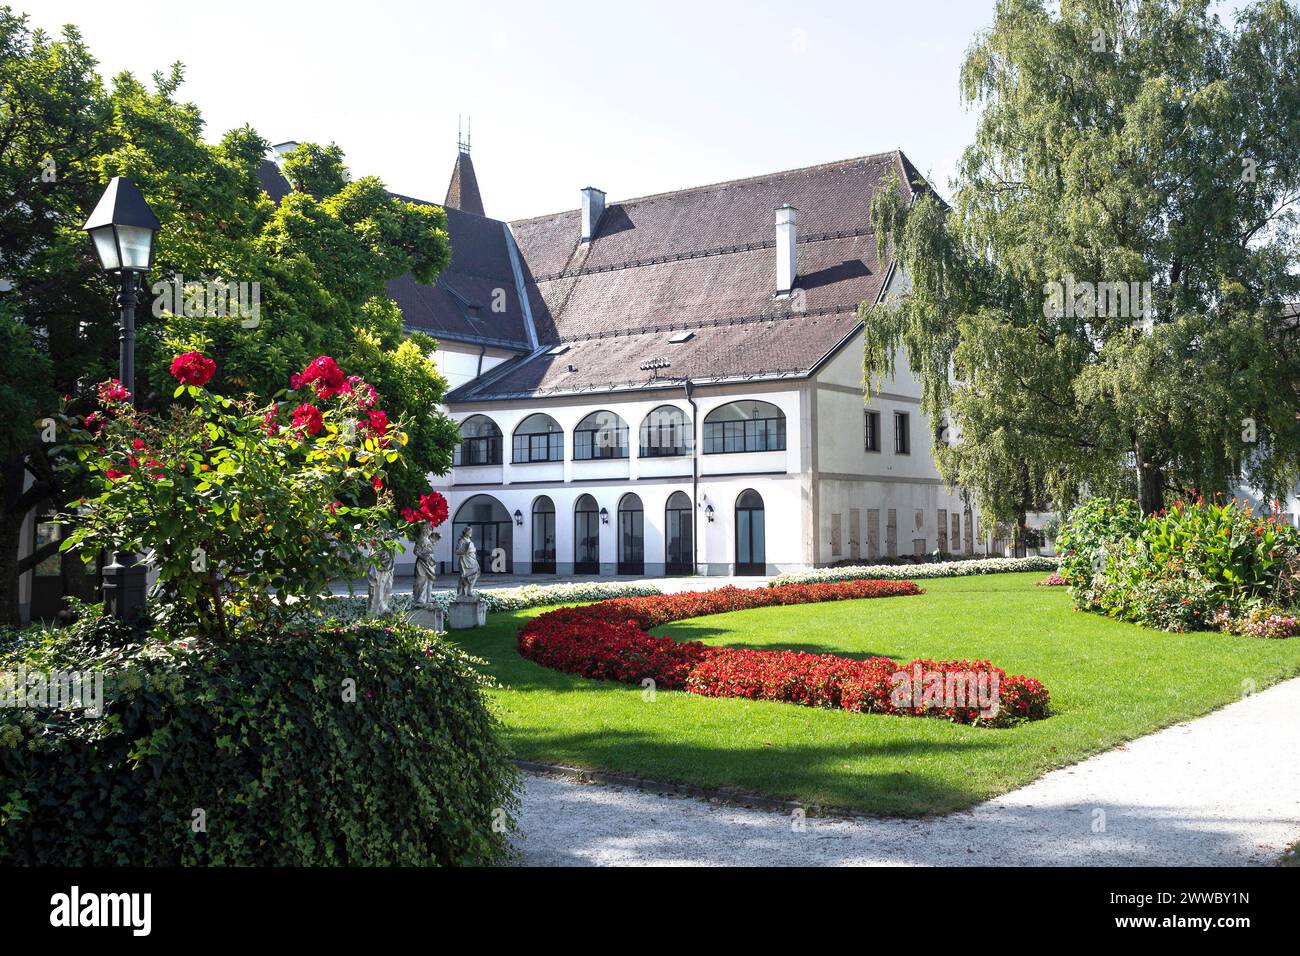 West Wing Of Wels Castle In The Castle Garden, Wels City, Upper Austria, Austria Stock Photo